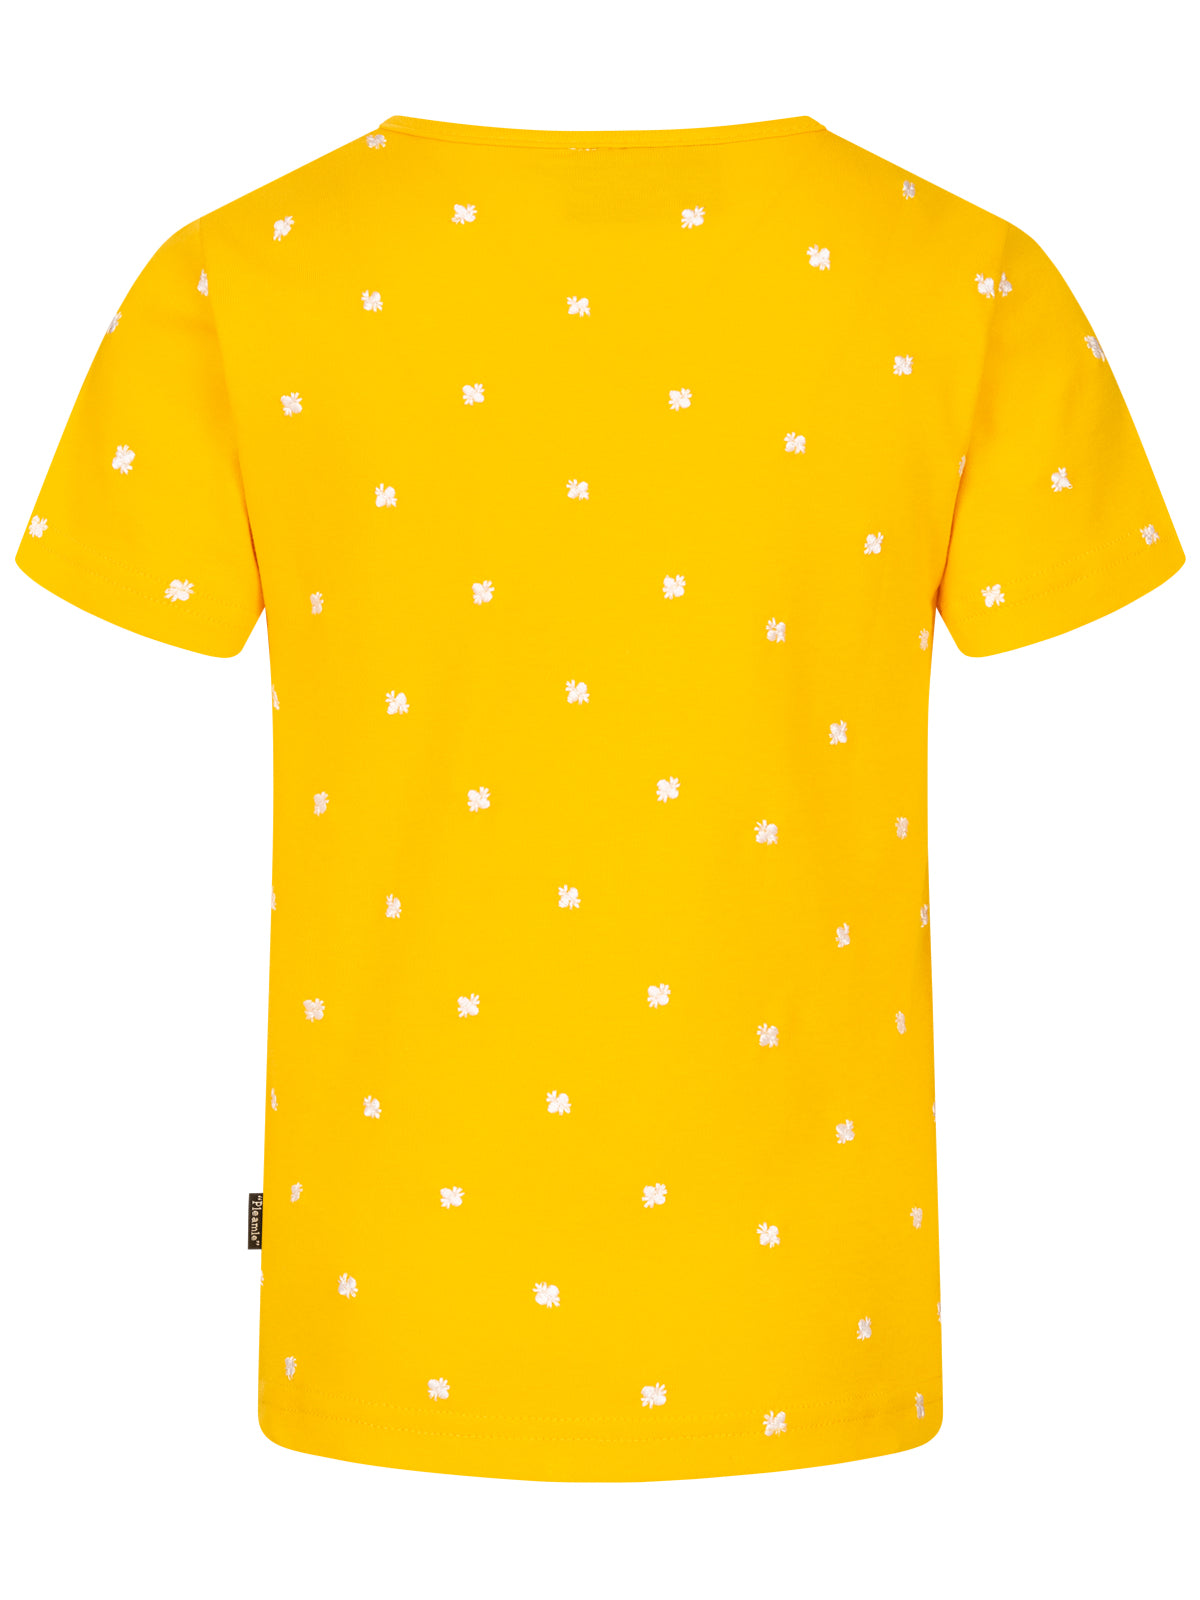 Pleamle Kinder Shirt Gelb